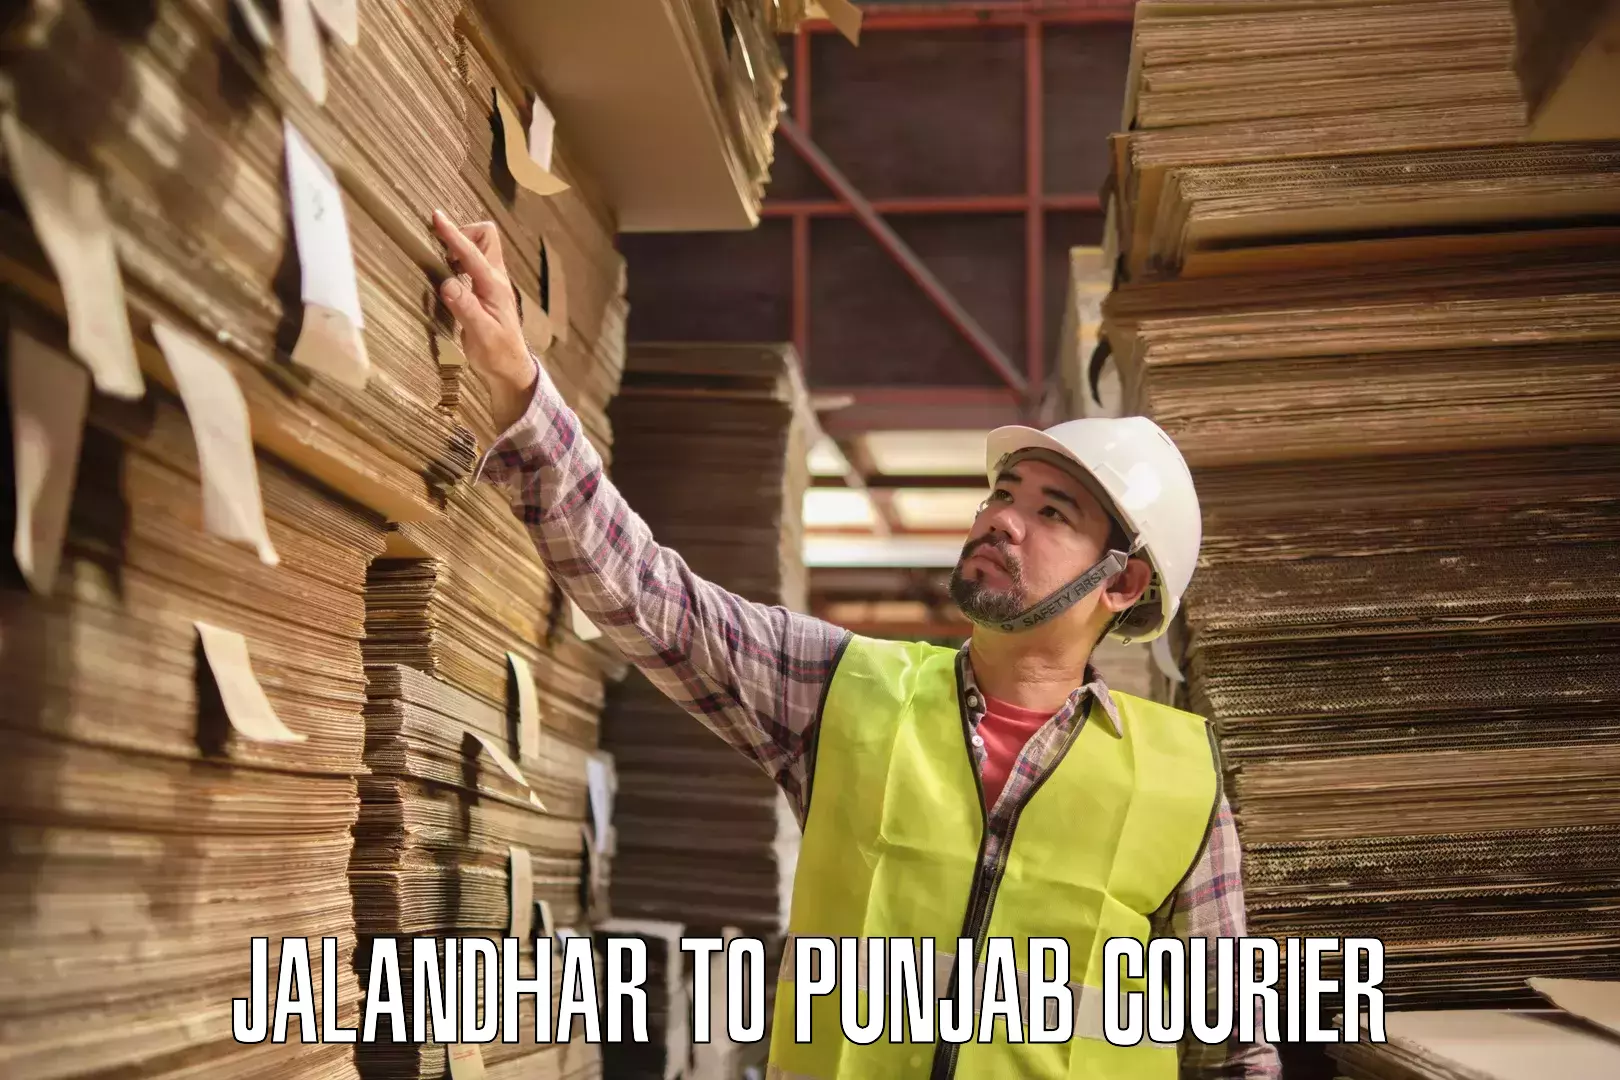 Global logistics network Jalandhar to Punjab